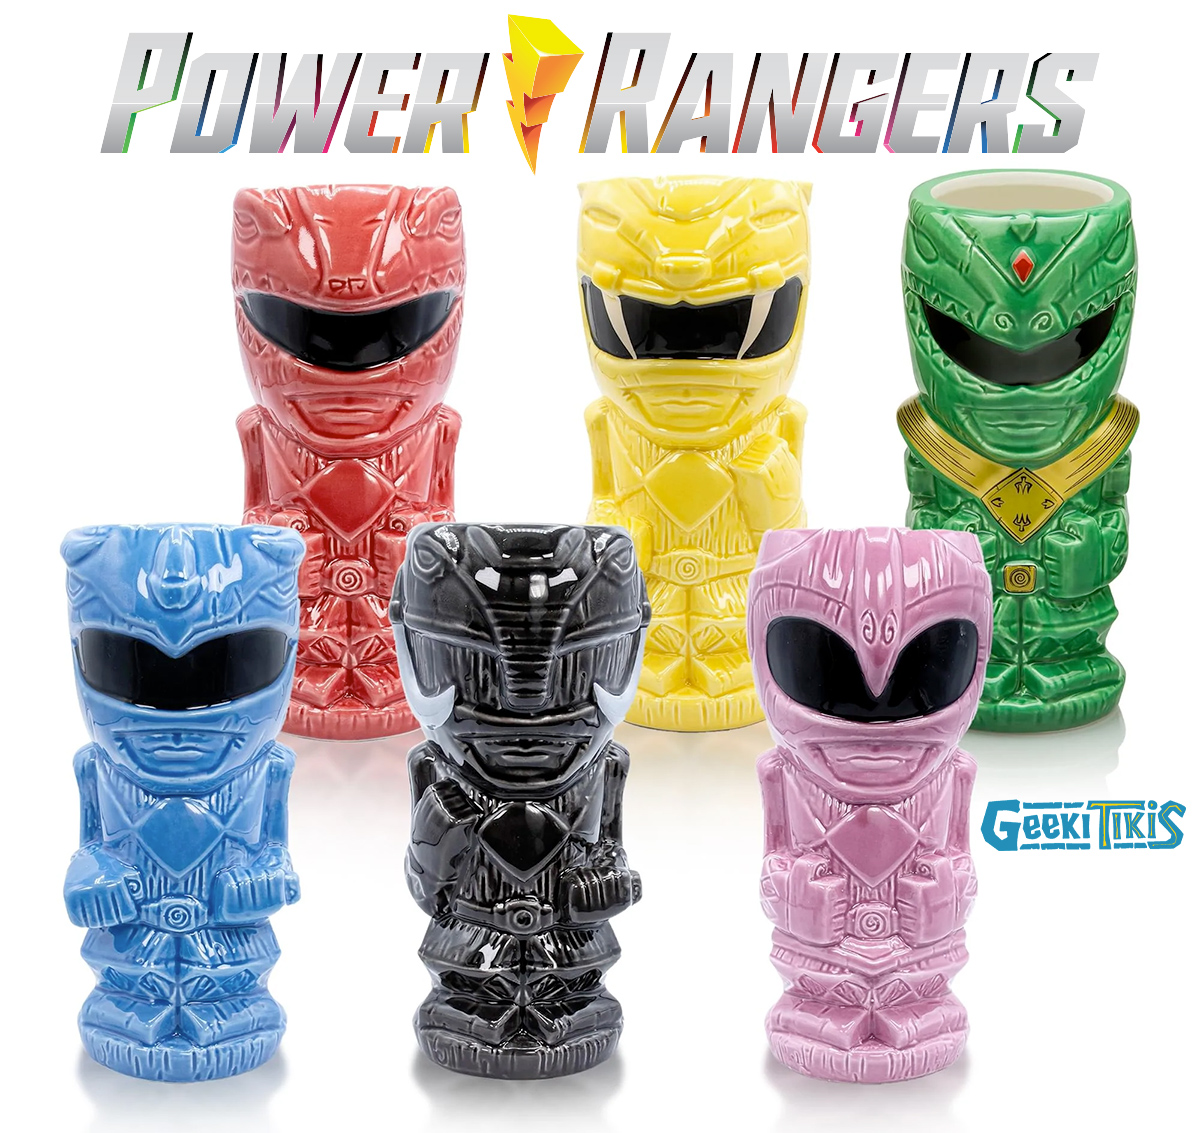 Canecas Geeky Tikis Power Rangers